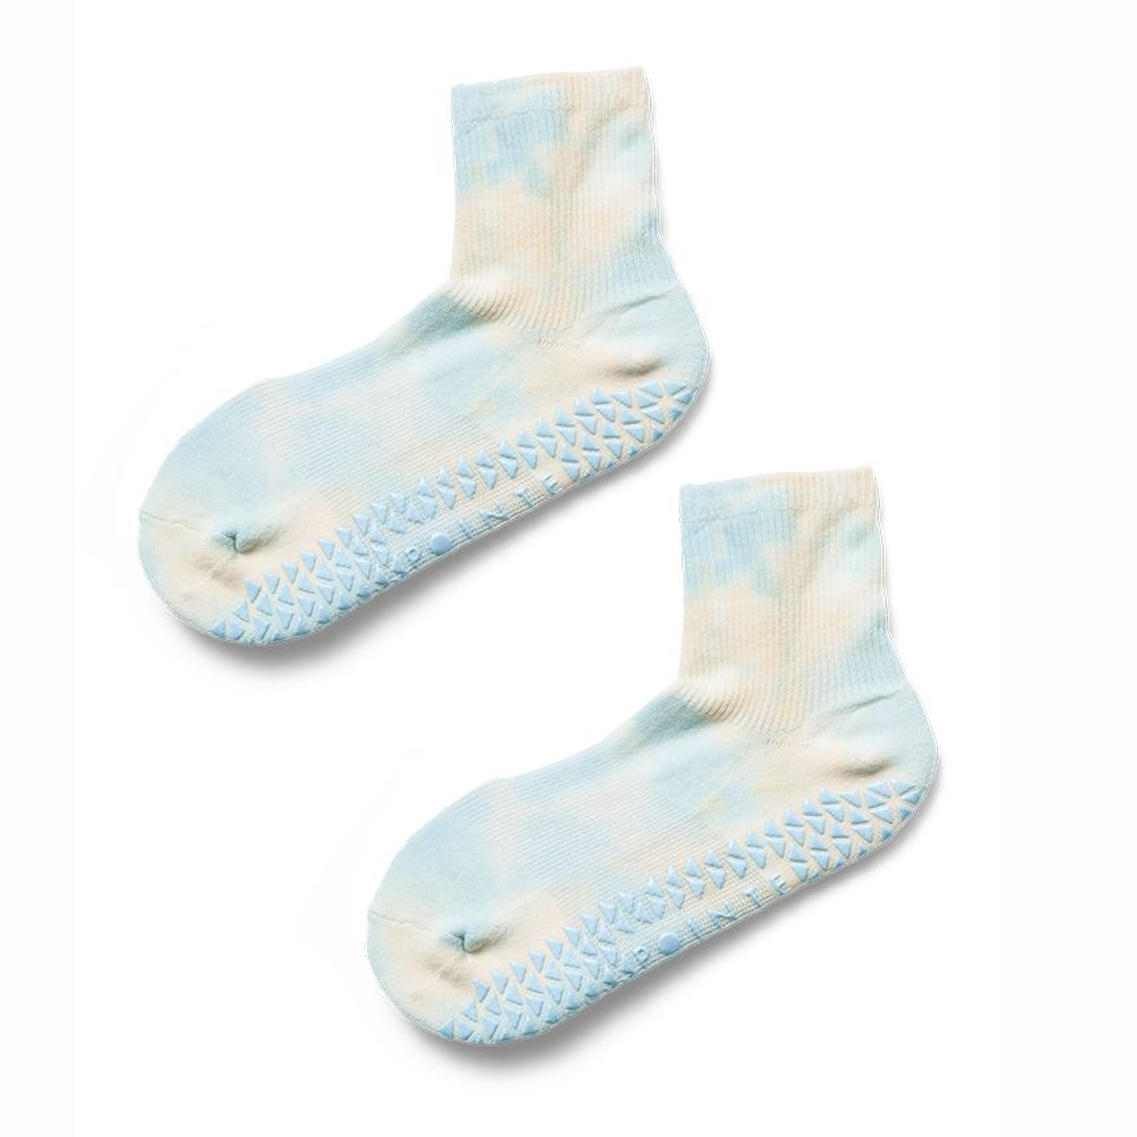 BIOAUM Yoga Socks for Women - 6 Pairs Cotton Cushion Non Slip Grip